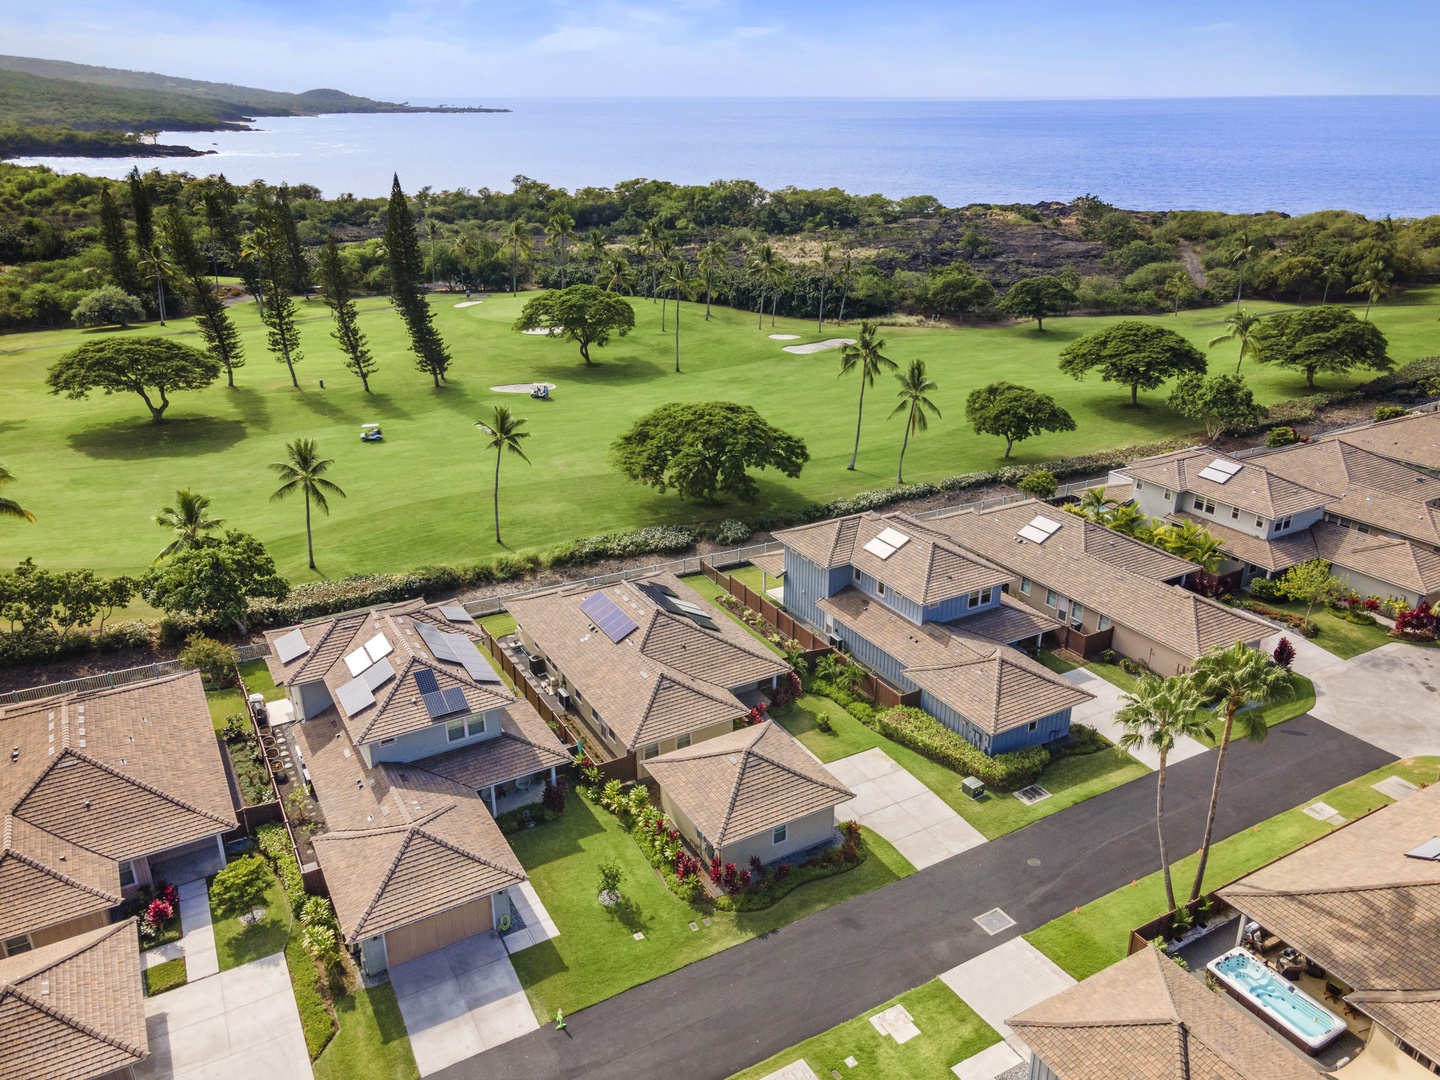 Kailua-Kona Vacation Rentals, Holua Kai #8 - Aerial